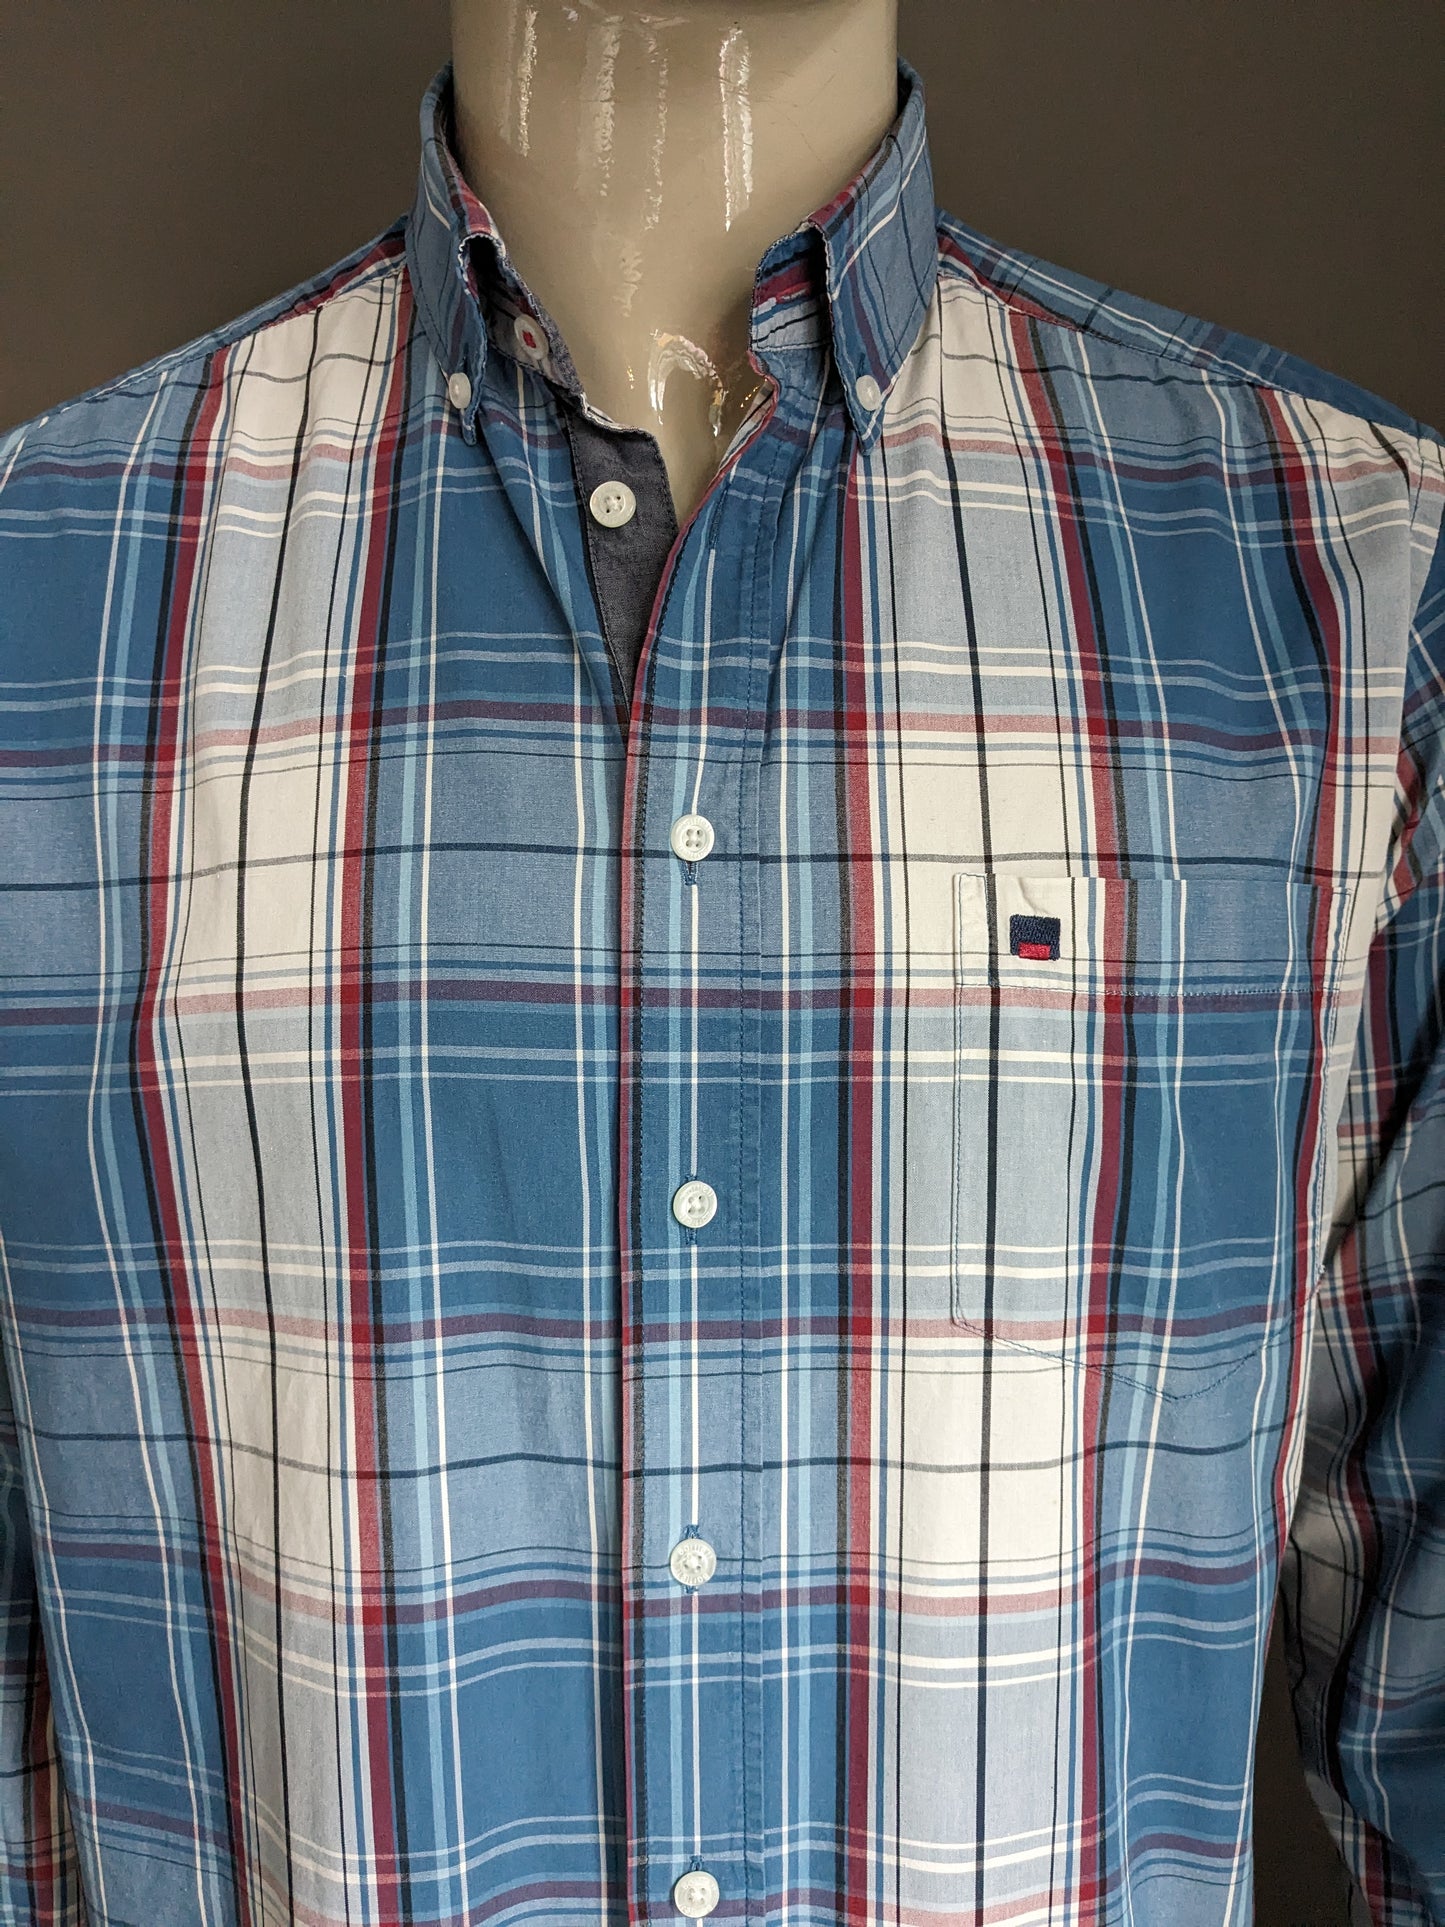 Bartlett shirt. Blue red white checkered. Size L.